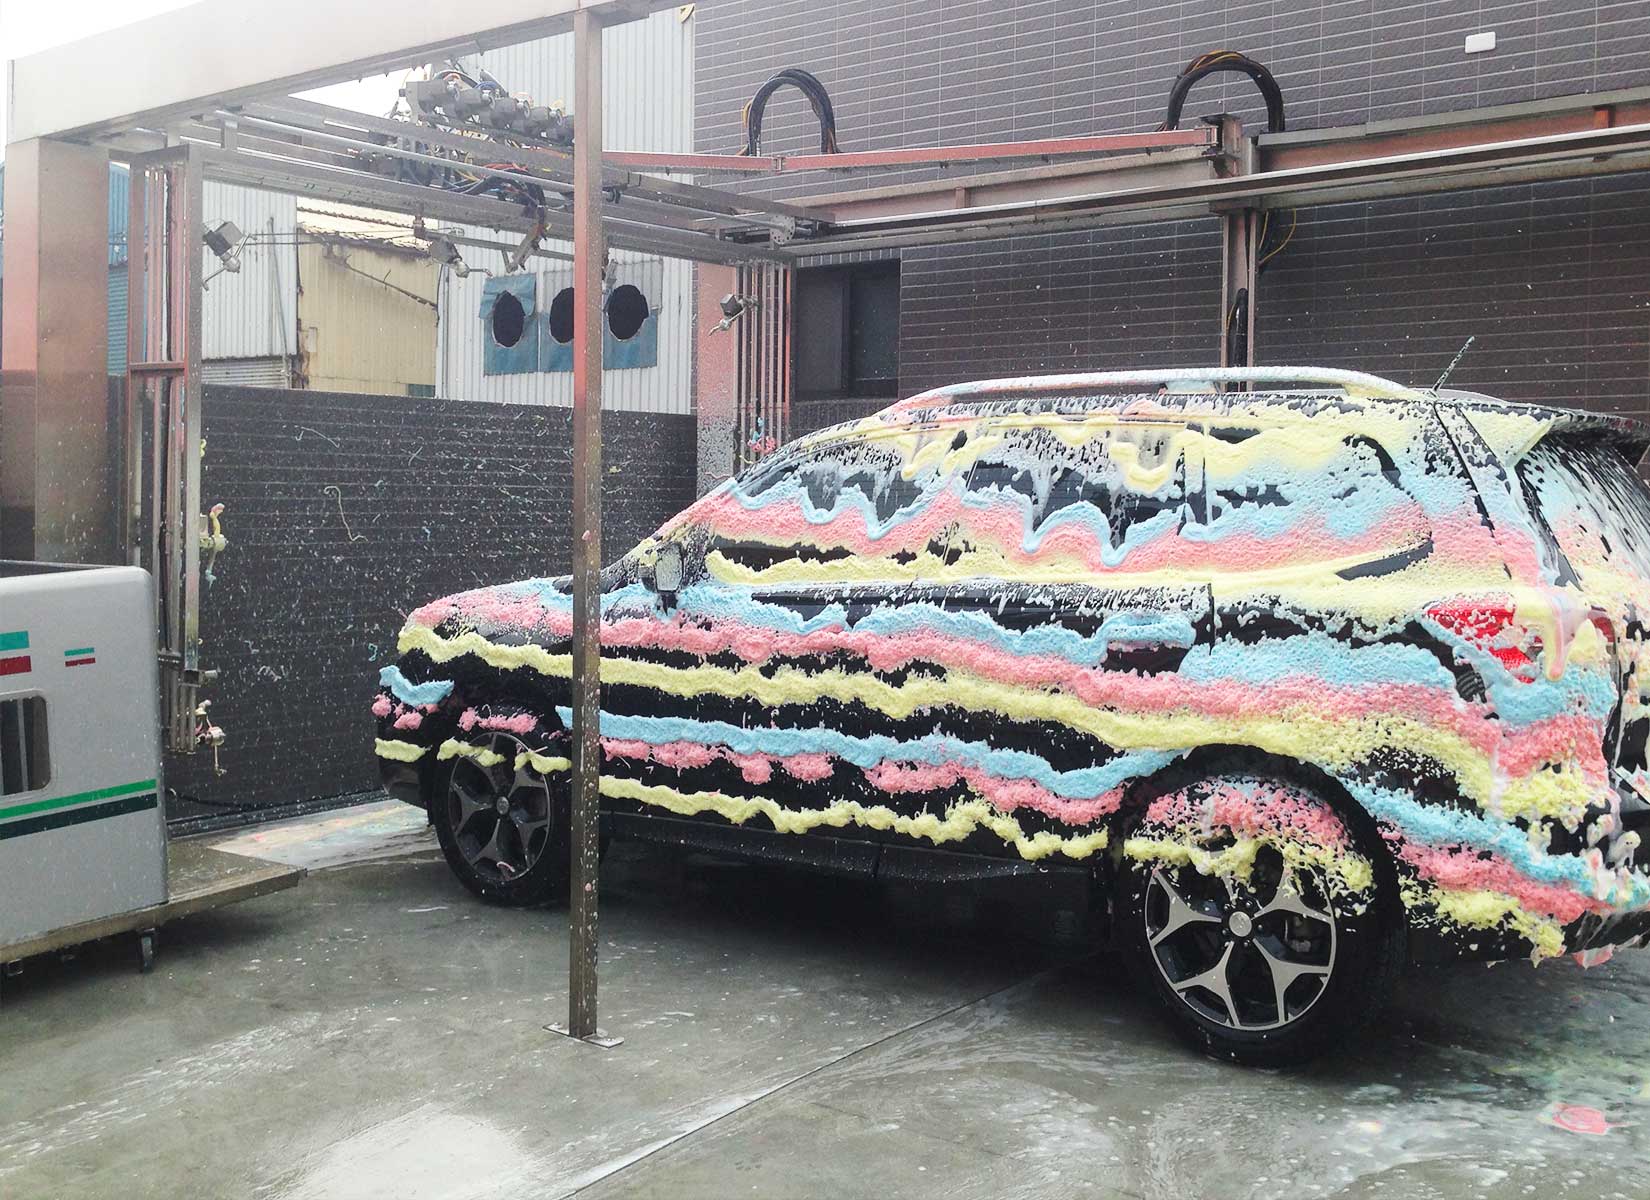 Car with multicolored foam spray on it